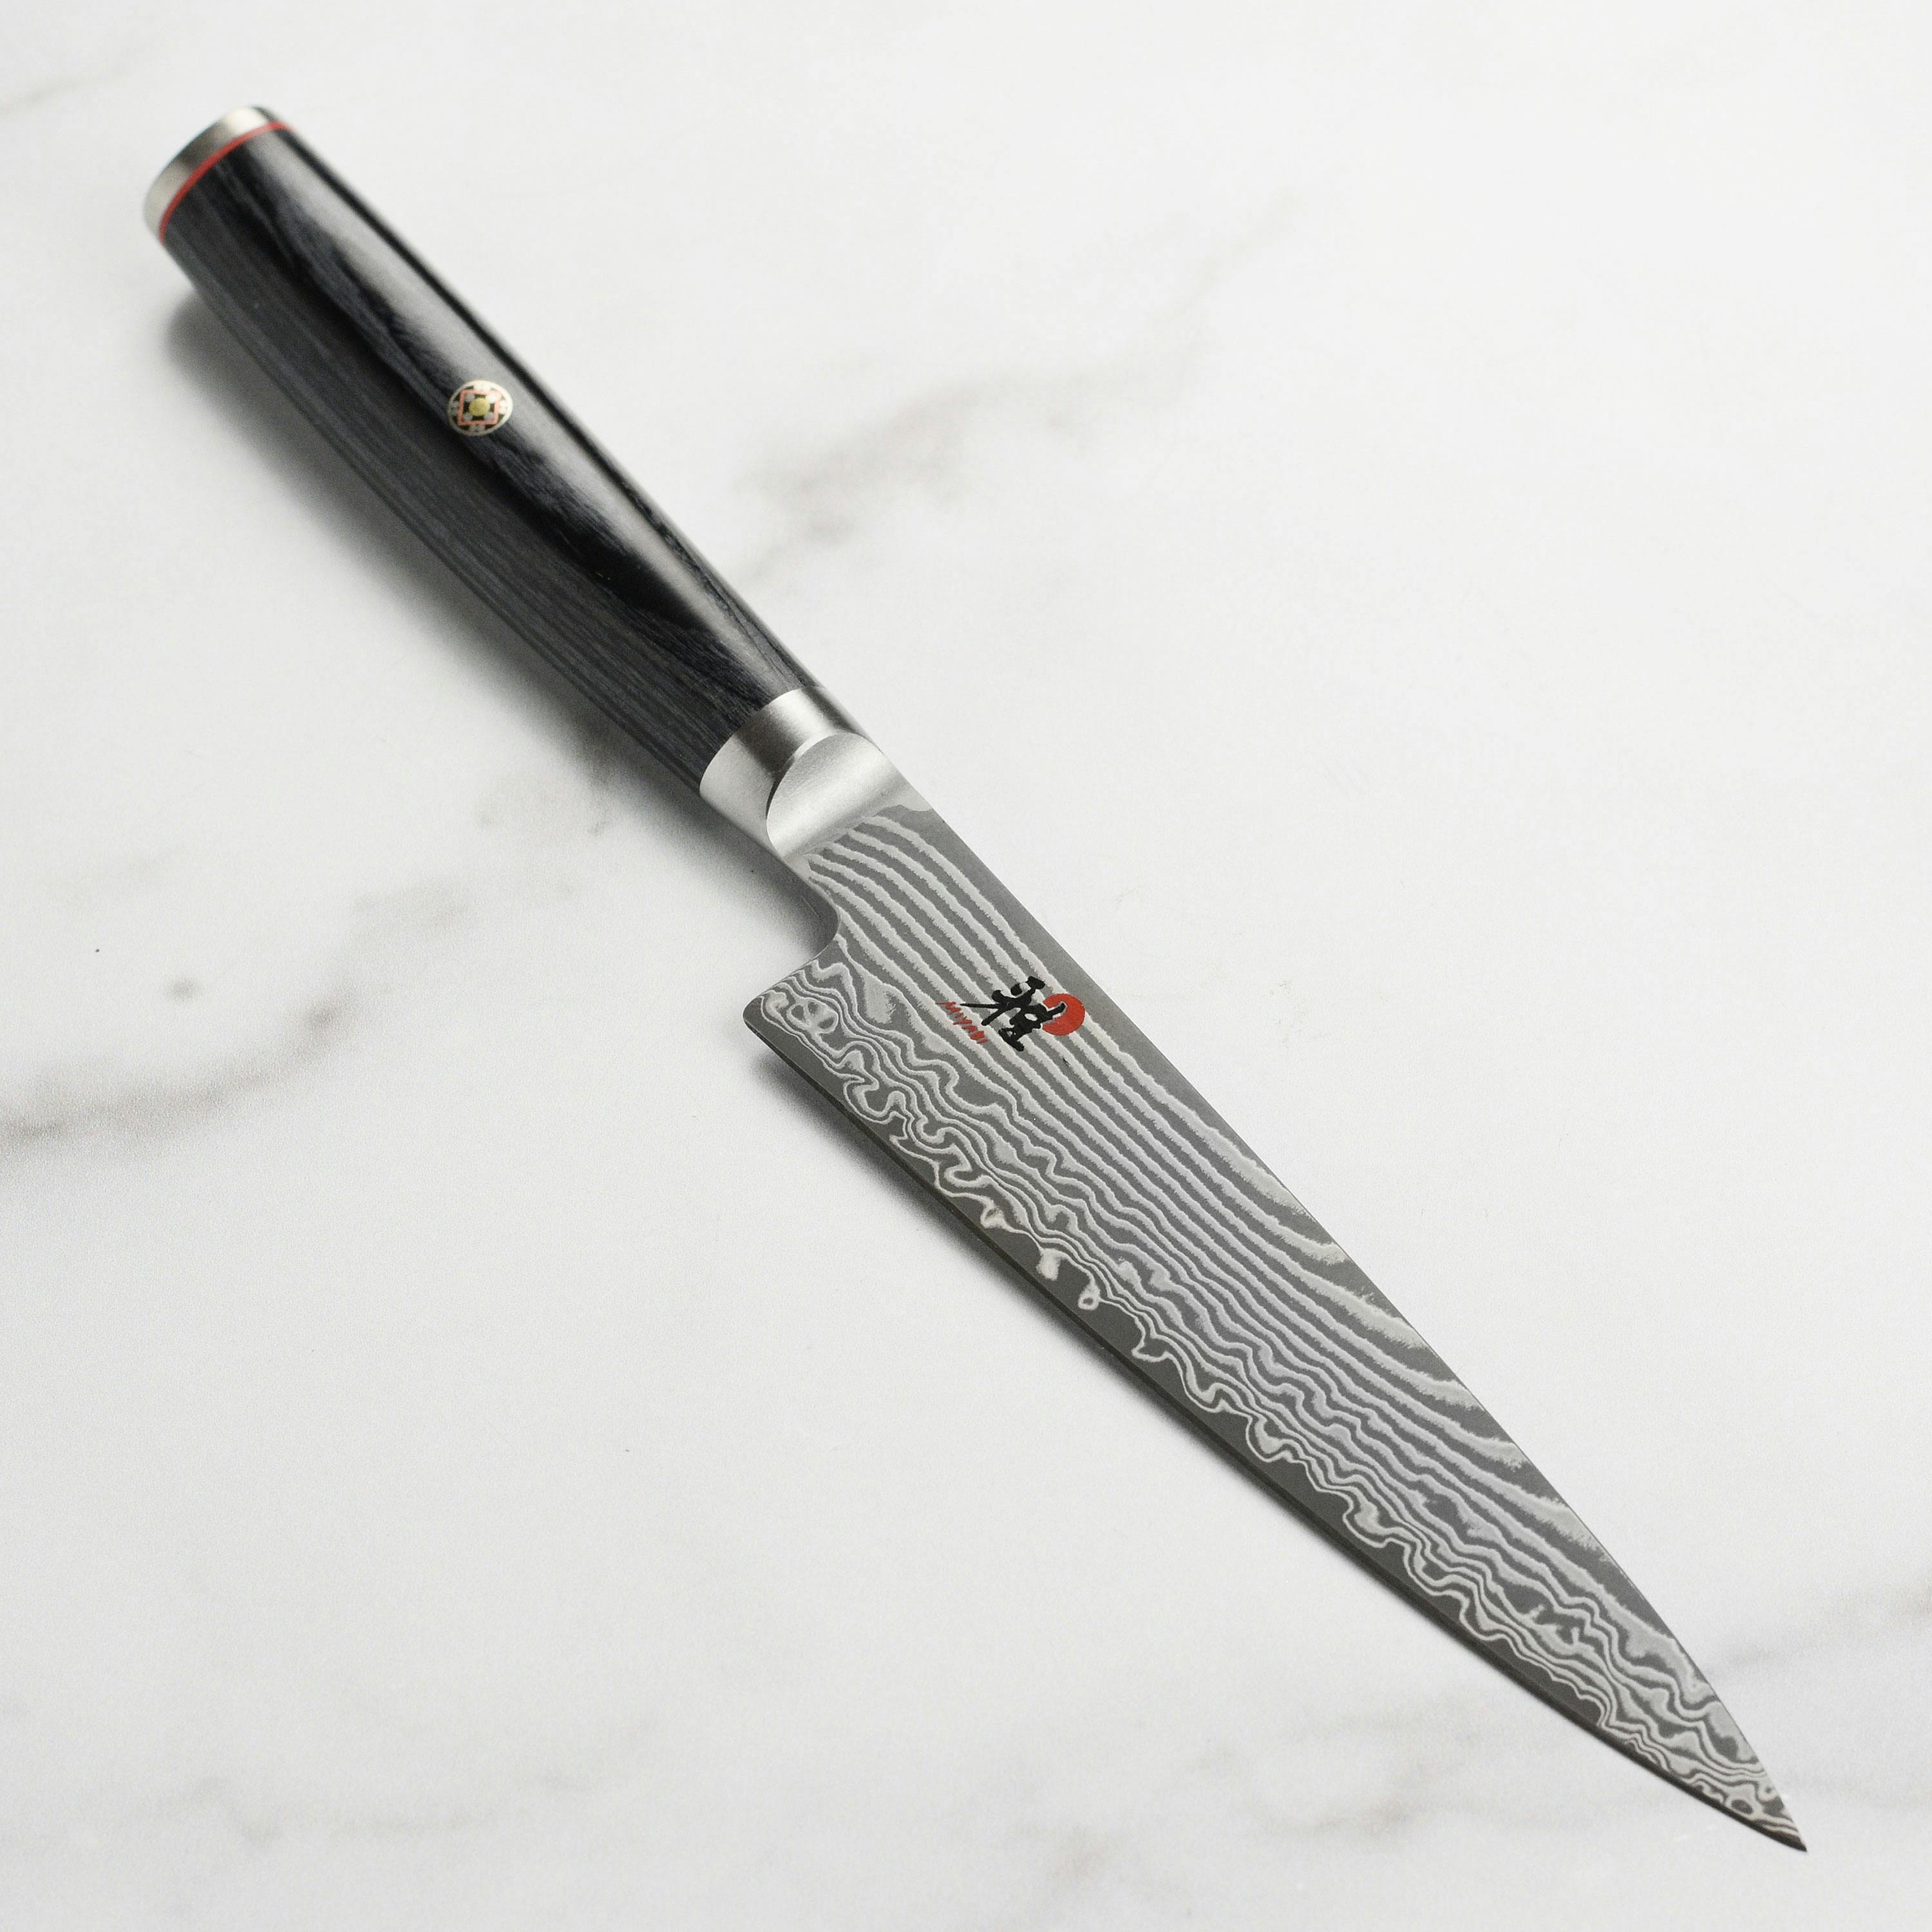 Miyabi Kaizen II 4.5" Utility Knife